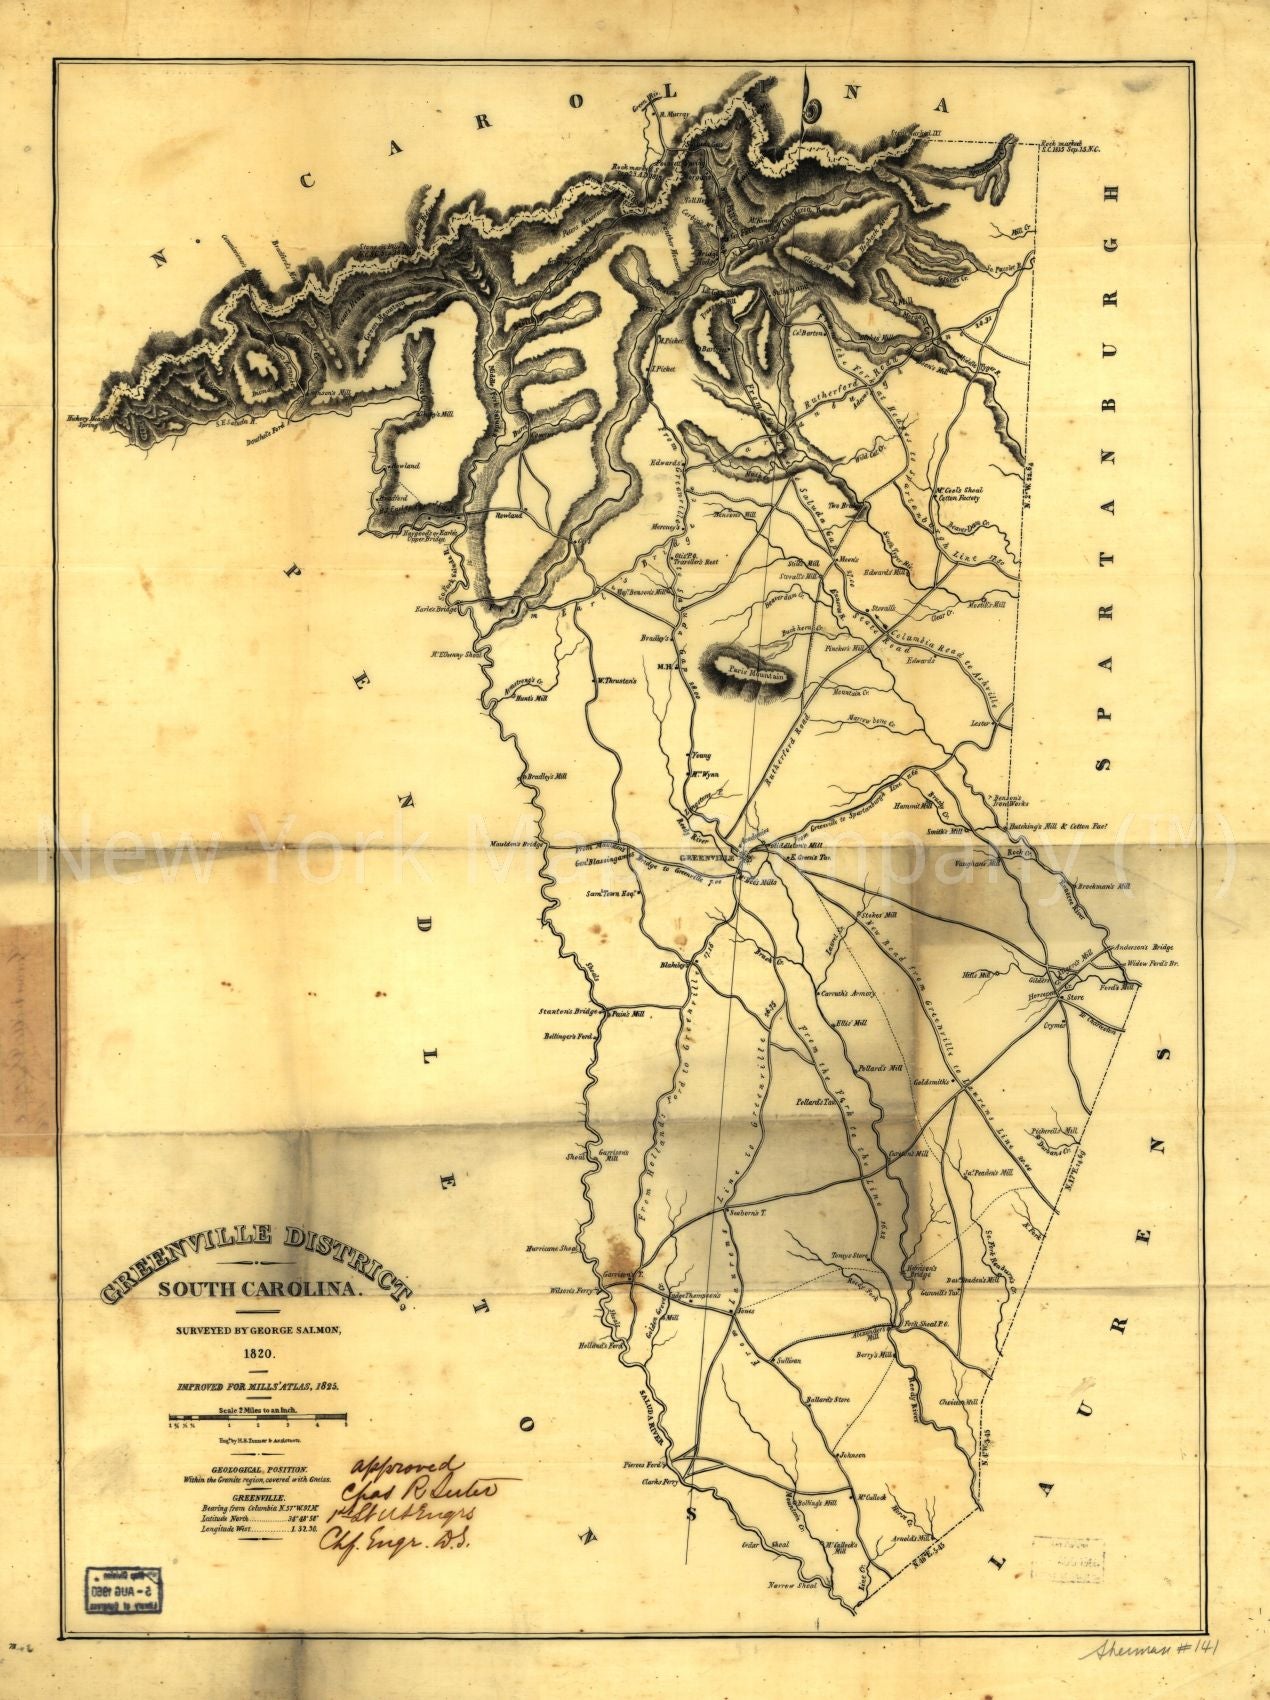 1825 map Greenville District, South Carolina Approved, Chas. R. Suter, 1st Lt., U.S. Engrs., Chf. Engr., D. S. Map Subjects: Greenville County | Greenville County SC | South Carolina |